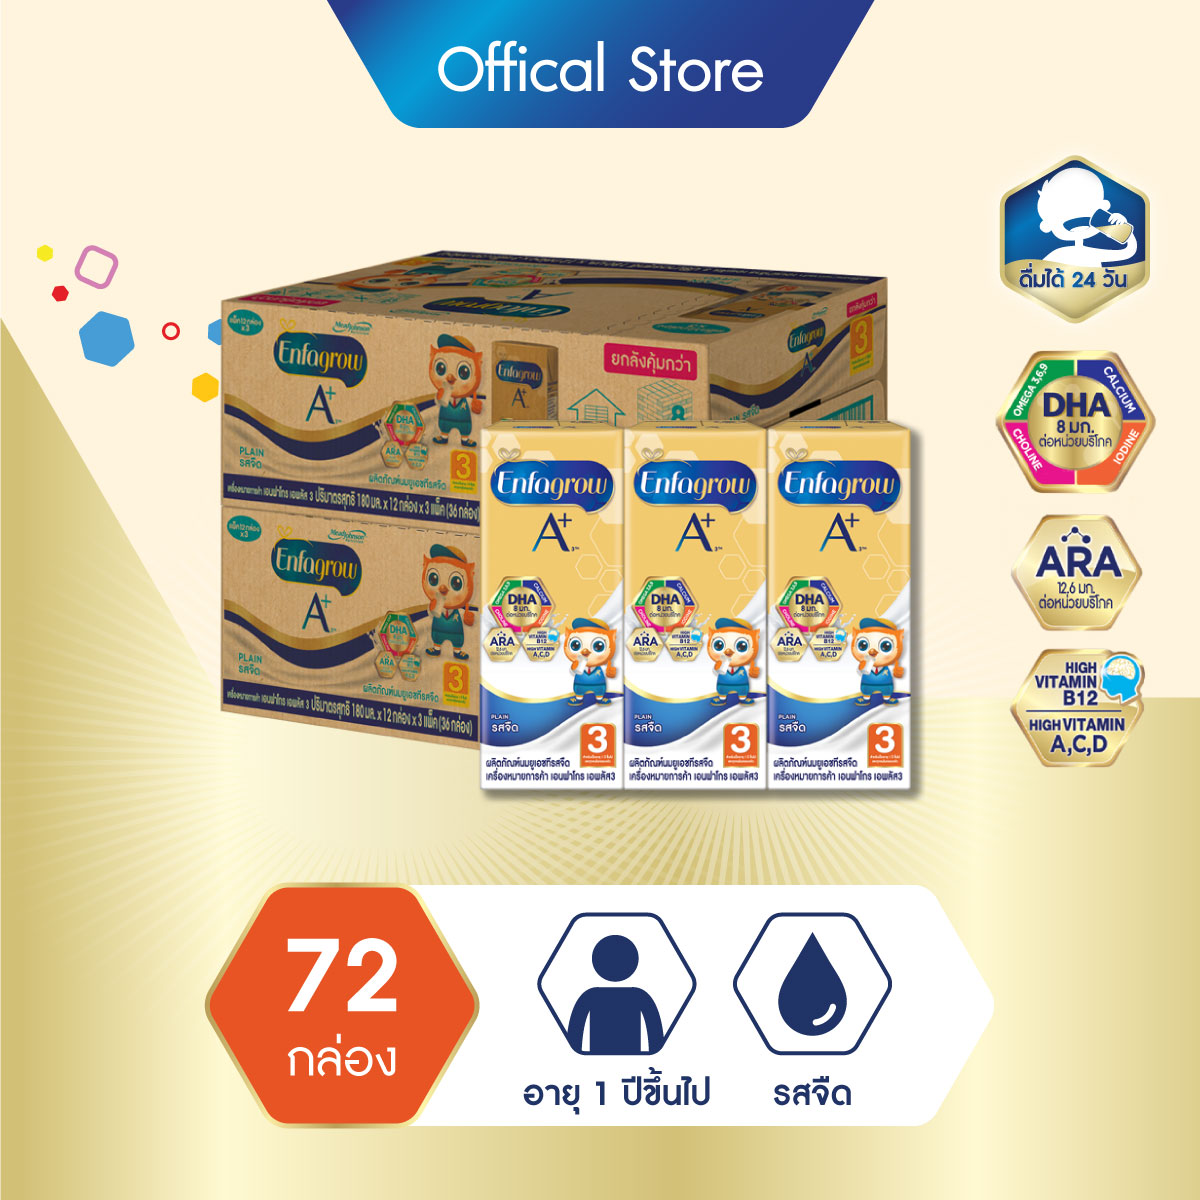 [UHT] เอนฟาโกร เอพลัส สูตร 3 รสจืด นมกล่อง ยูเอชที สำหรับ เด็ก 36 กล่อง จำนวน 2 ลัง Enfagrow A+ Formula 3 Plain UHT Milk for Baby Kids Wholesales 36 units 2 cases